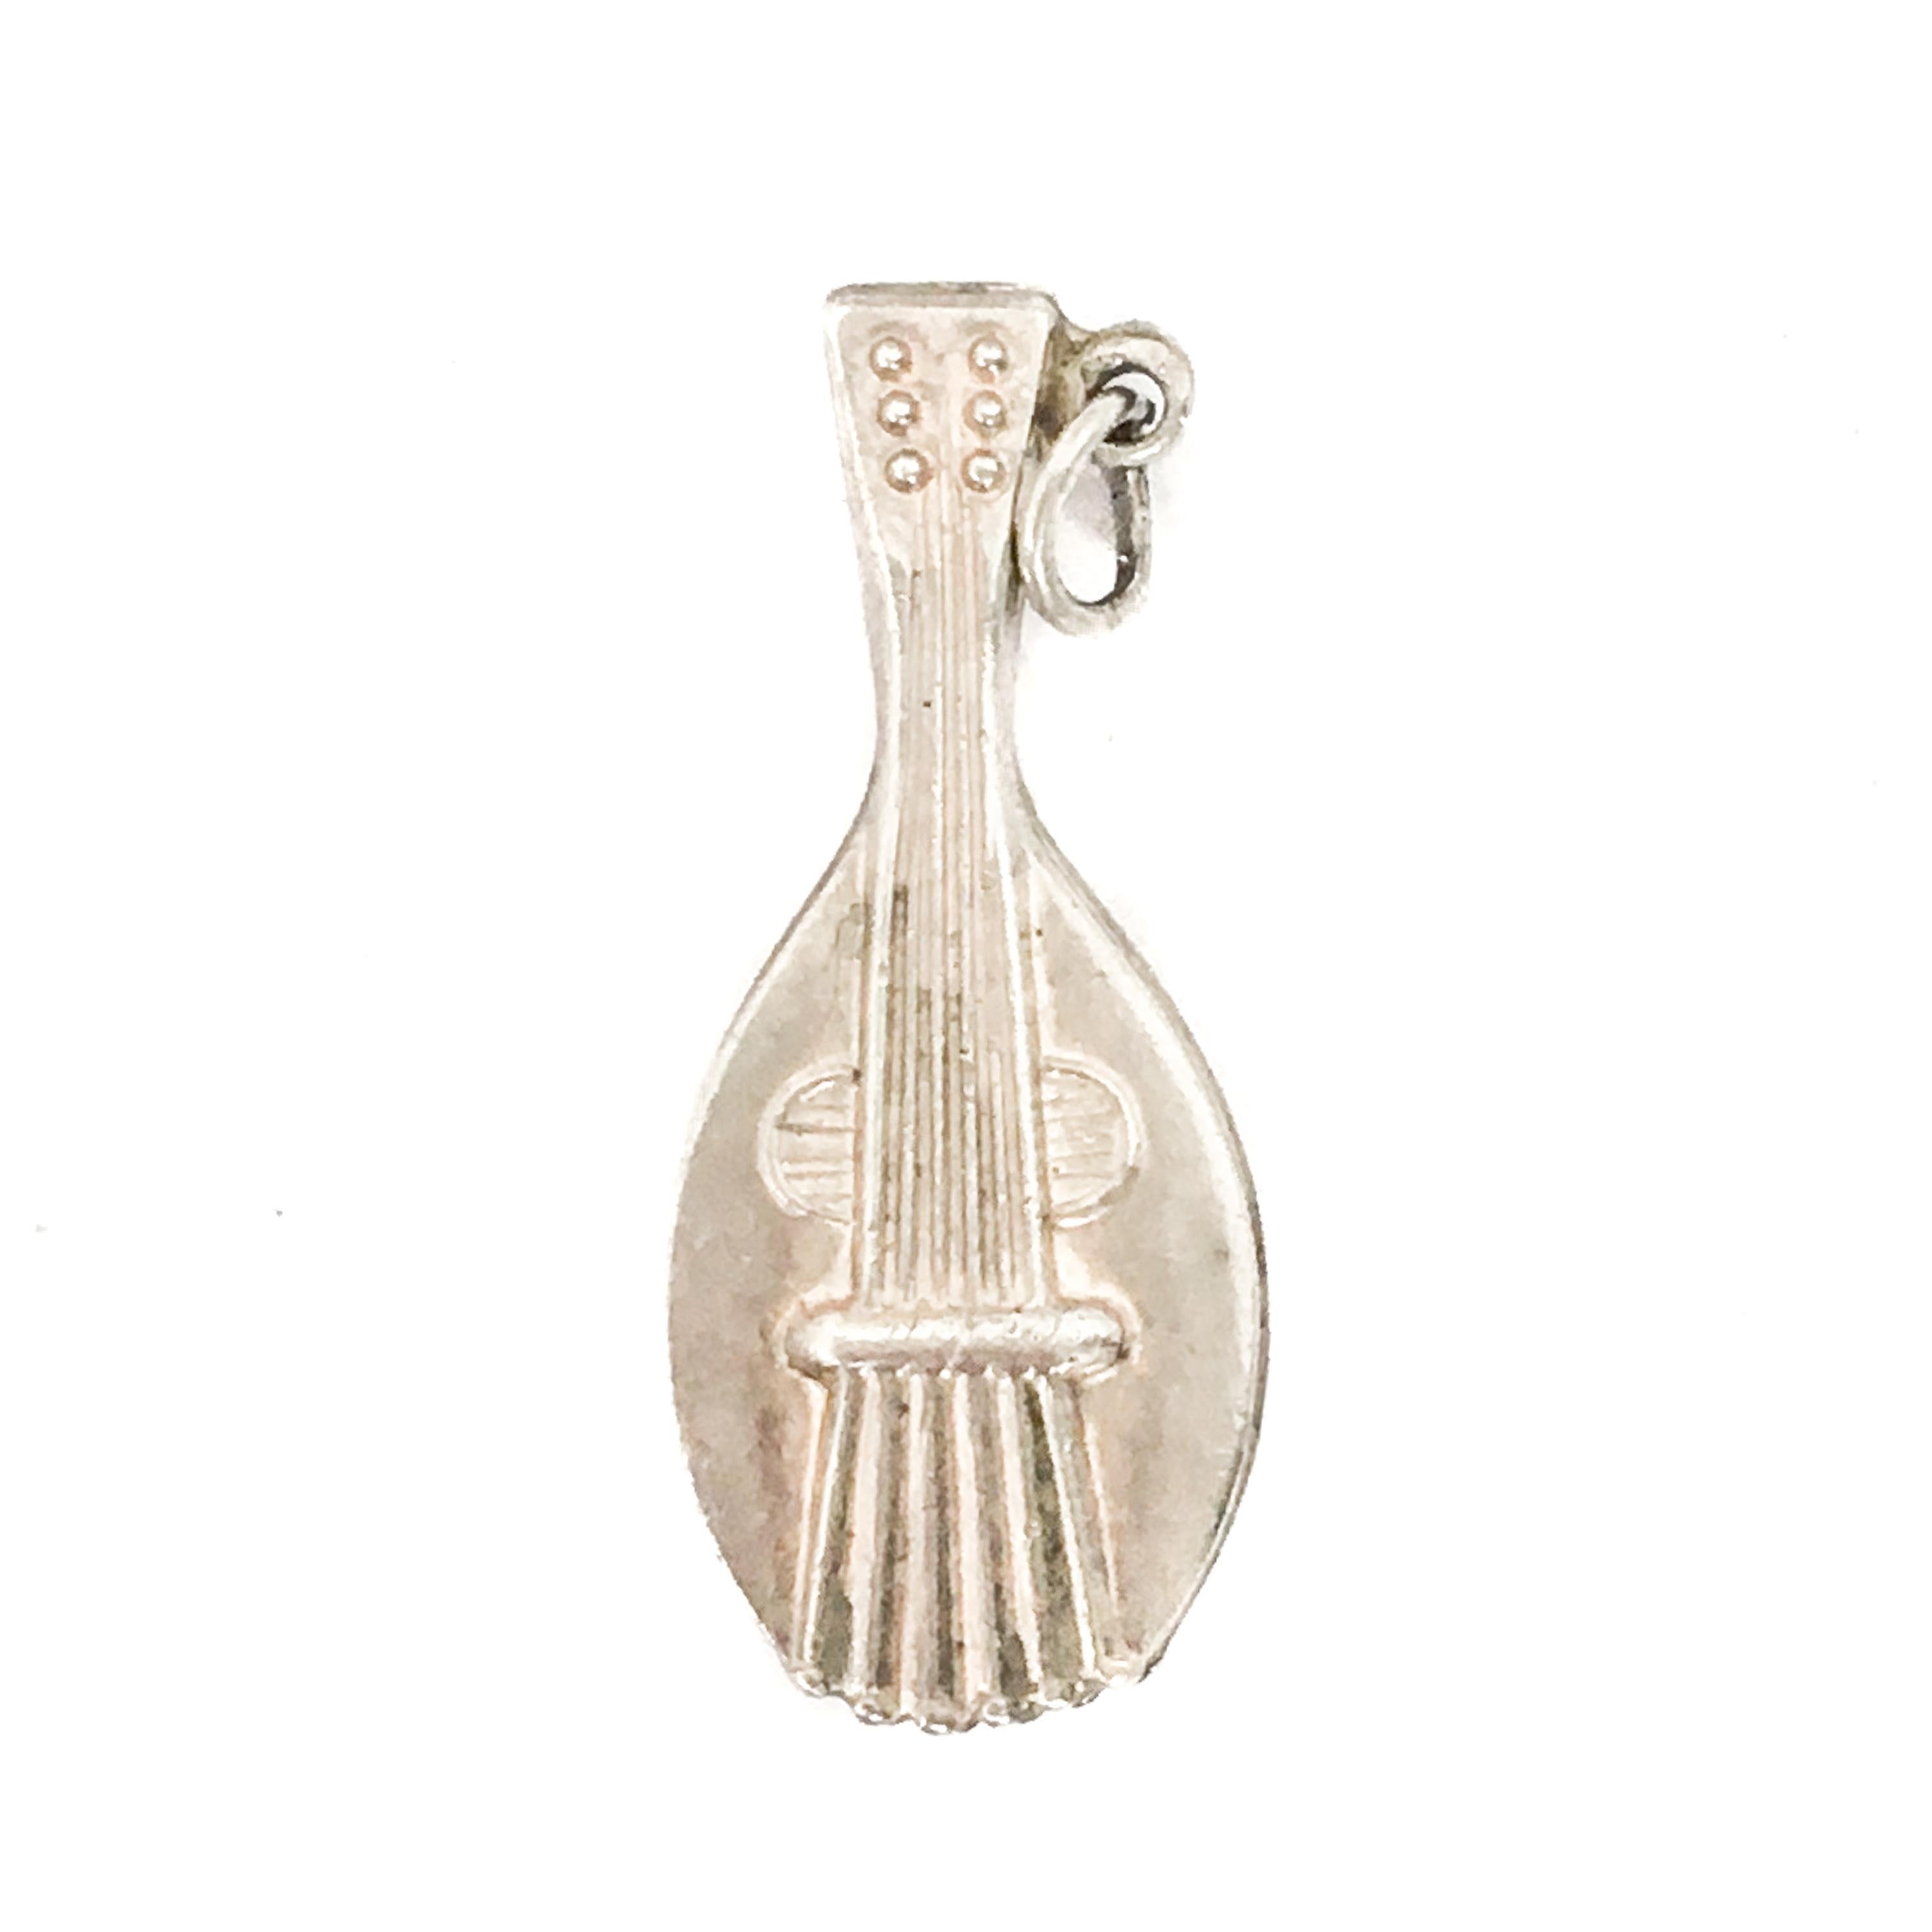 Vintage Mandolin Guitar Silver Charm Pendant